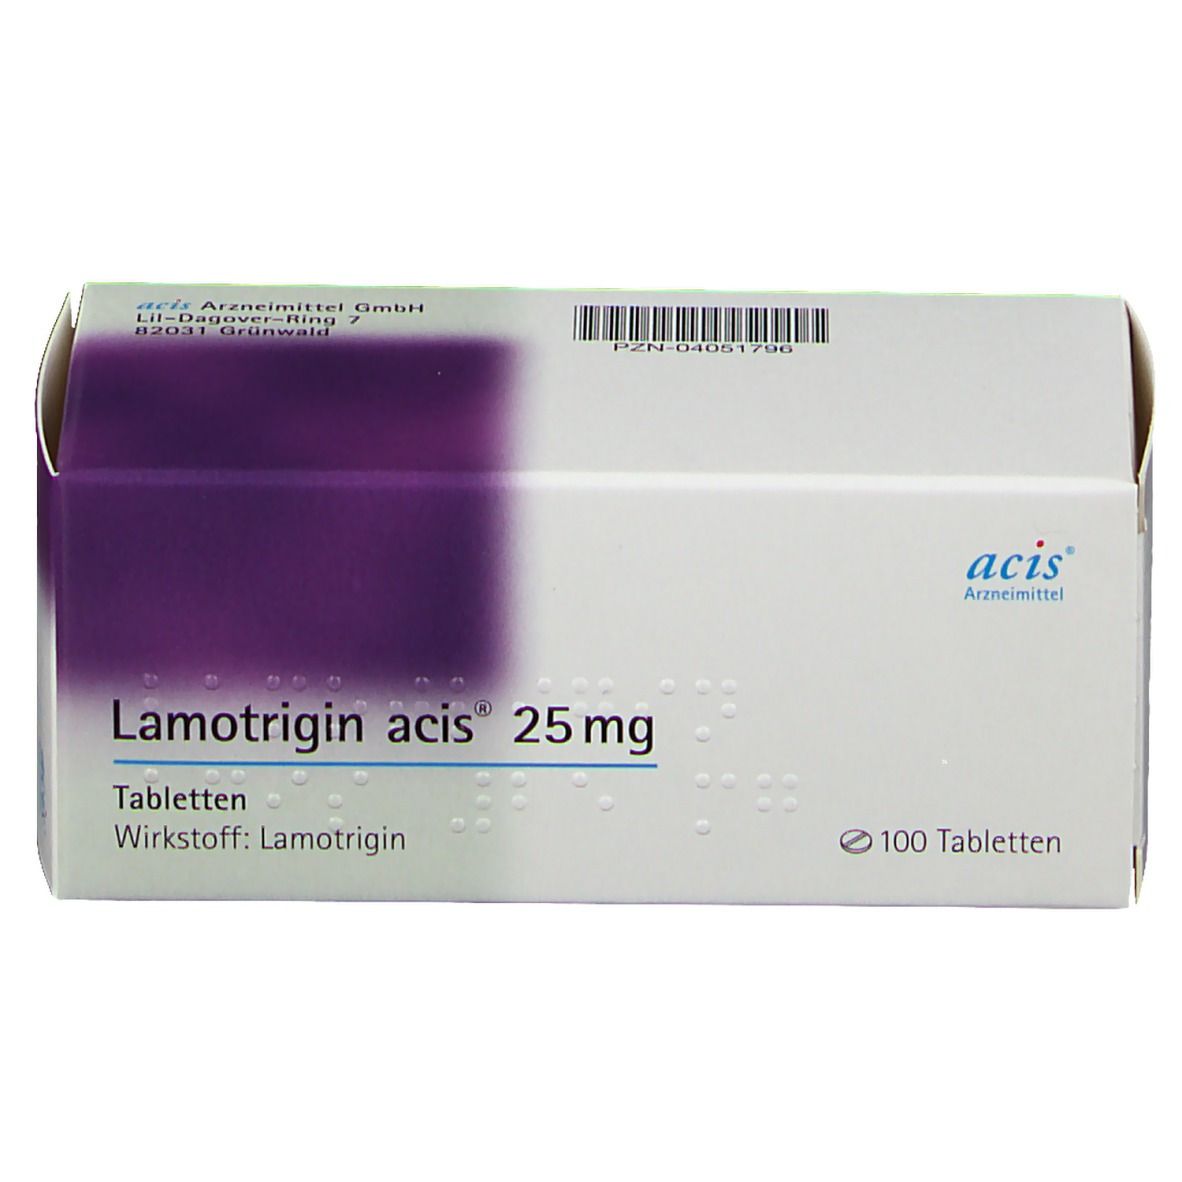 Lamotrigin acis® 25Mg